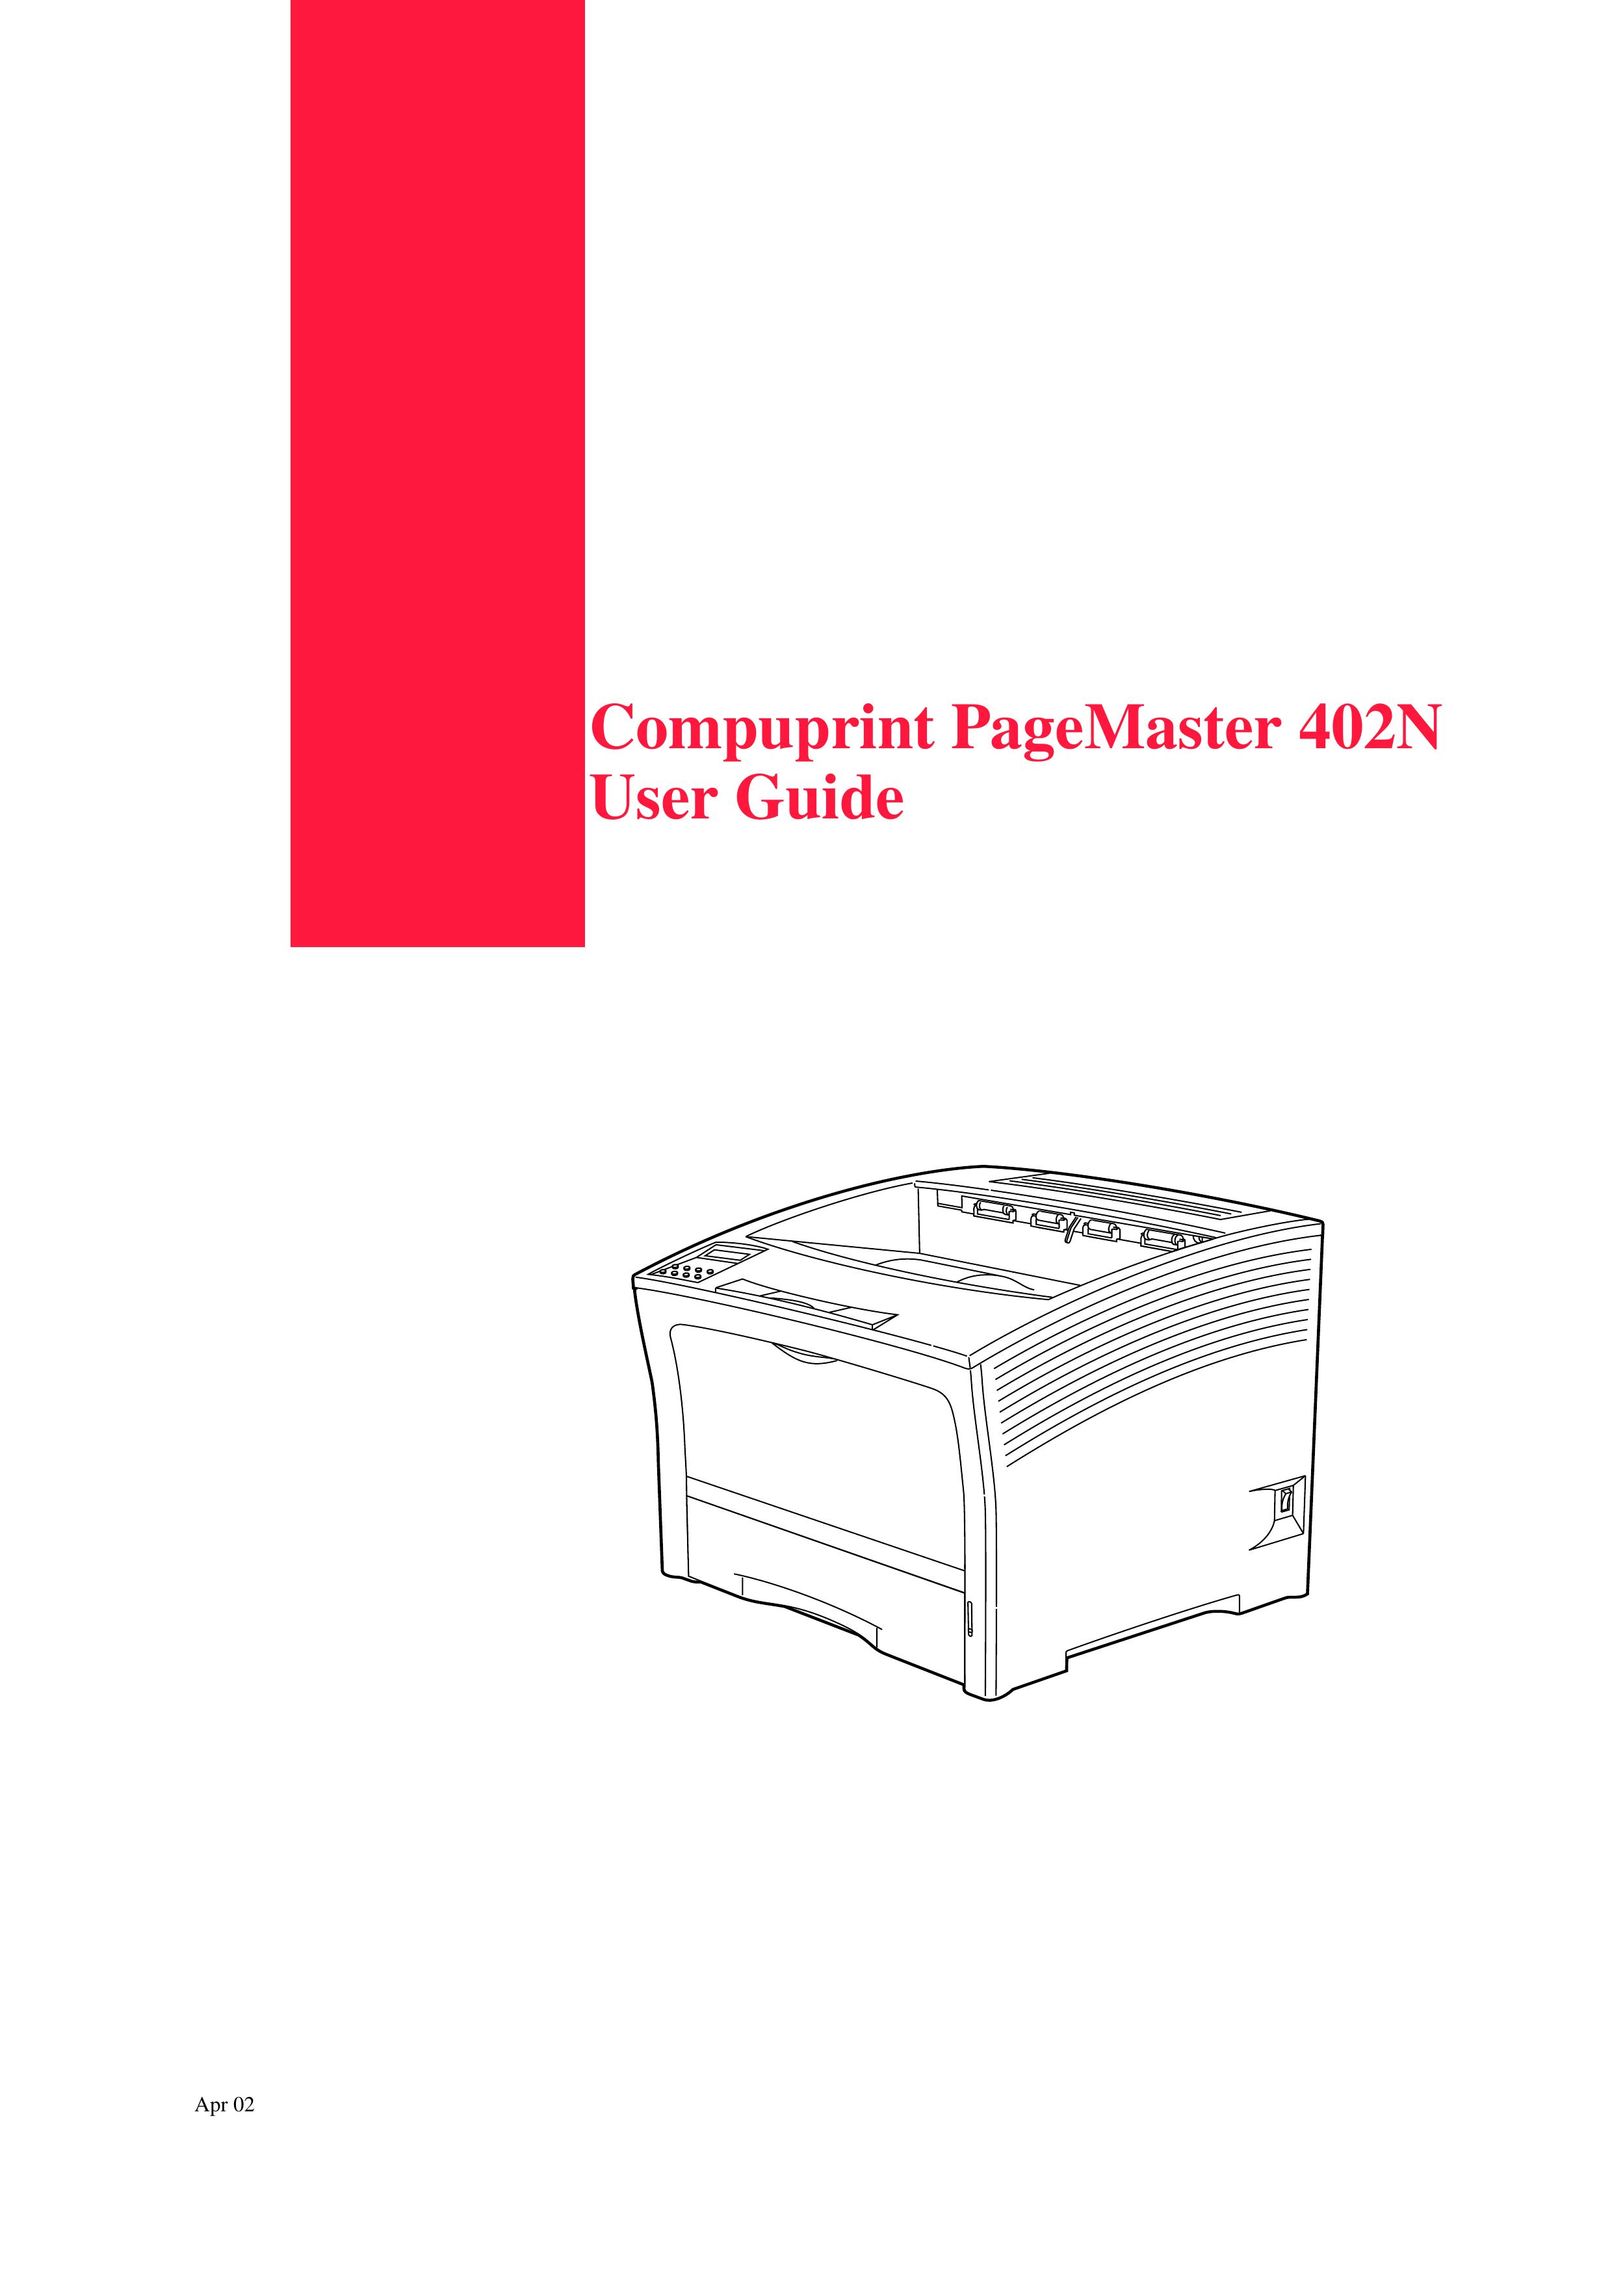 CPG PageMaster 402N Printer User Manual